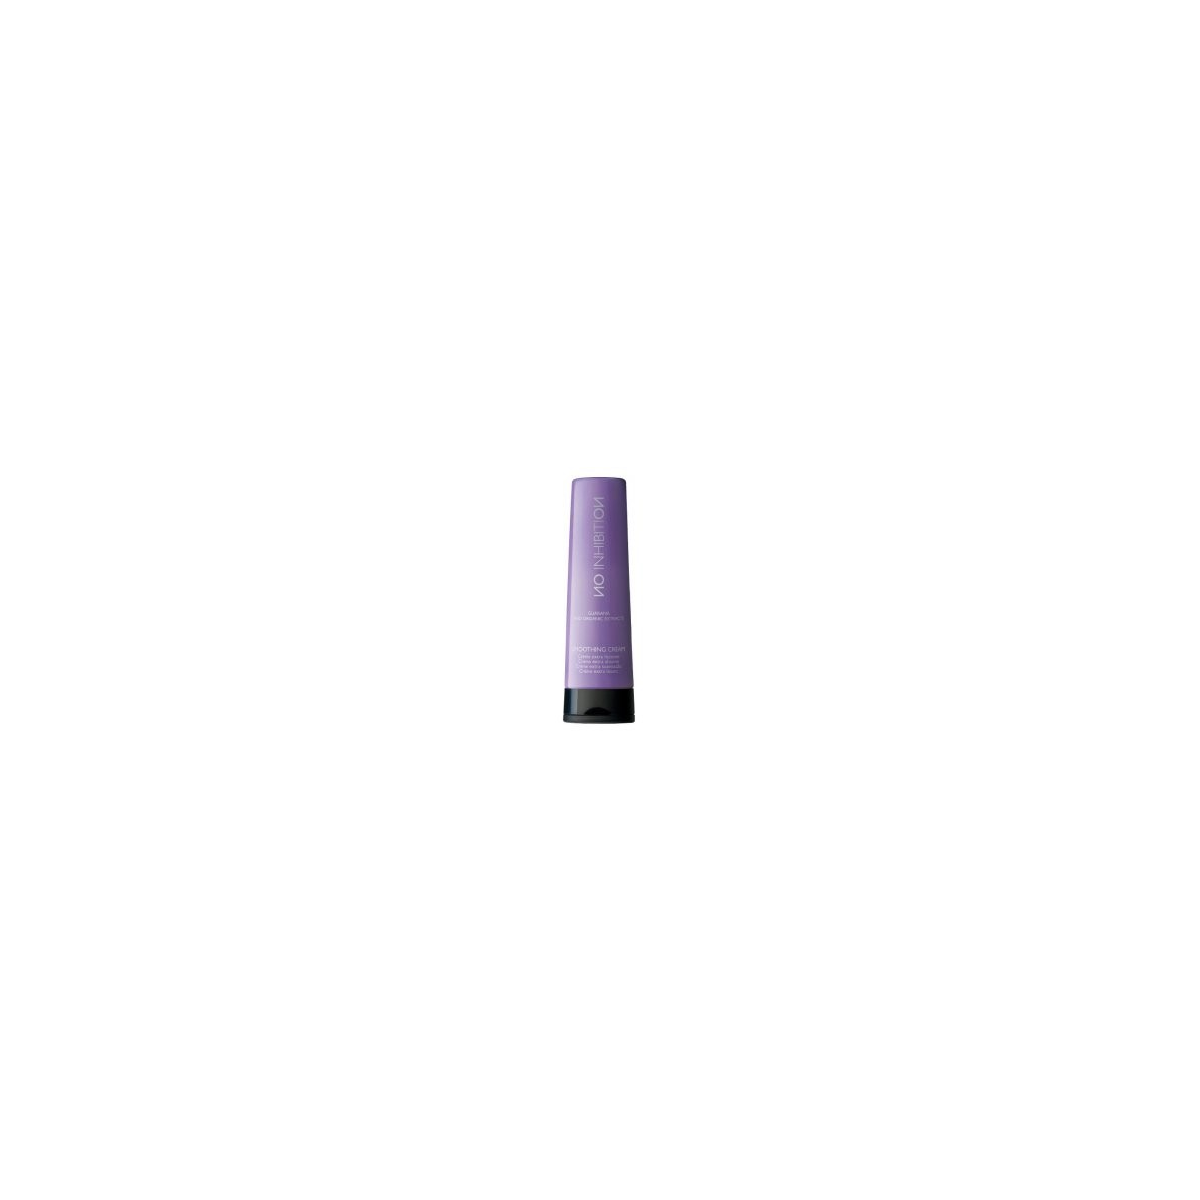 Z.ONE - NO INHIBITION - SMOOTHING CREAM (200ml) Crema Lisciante